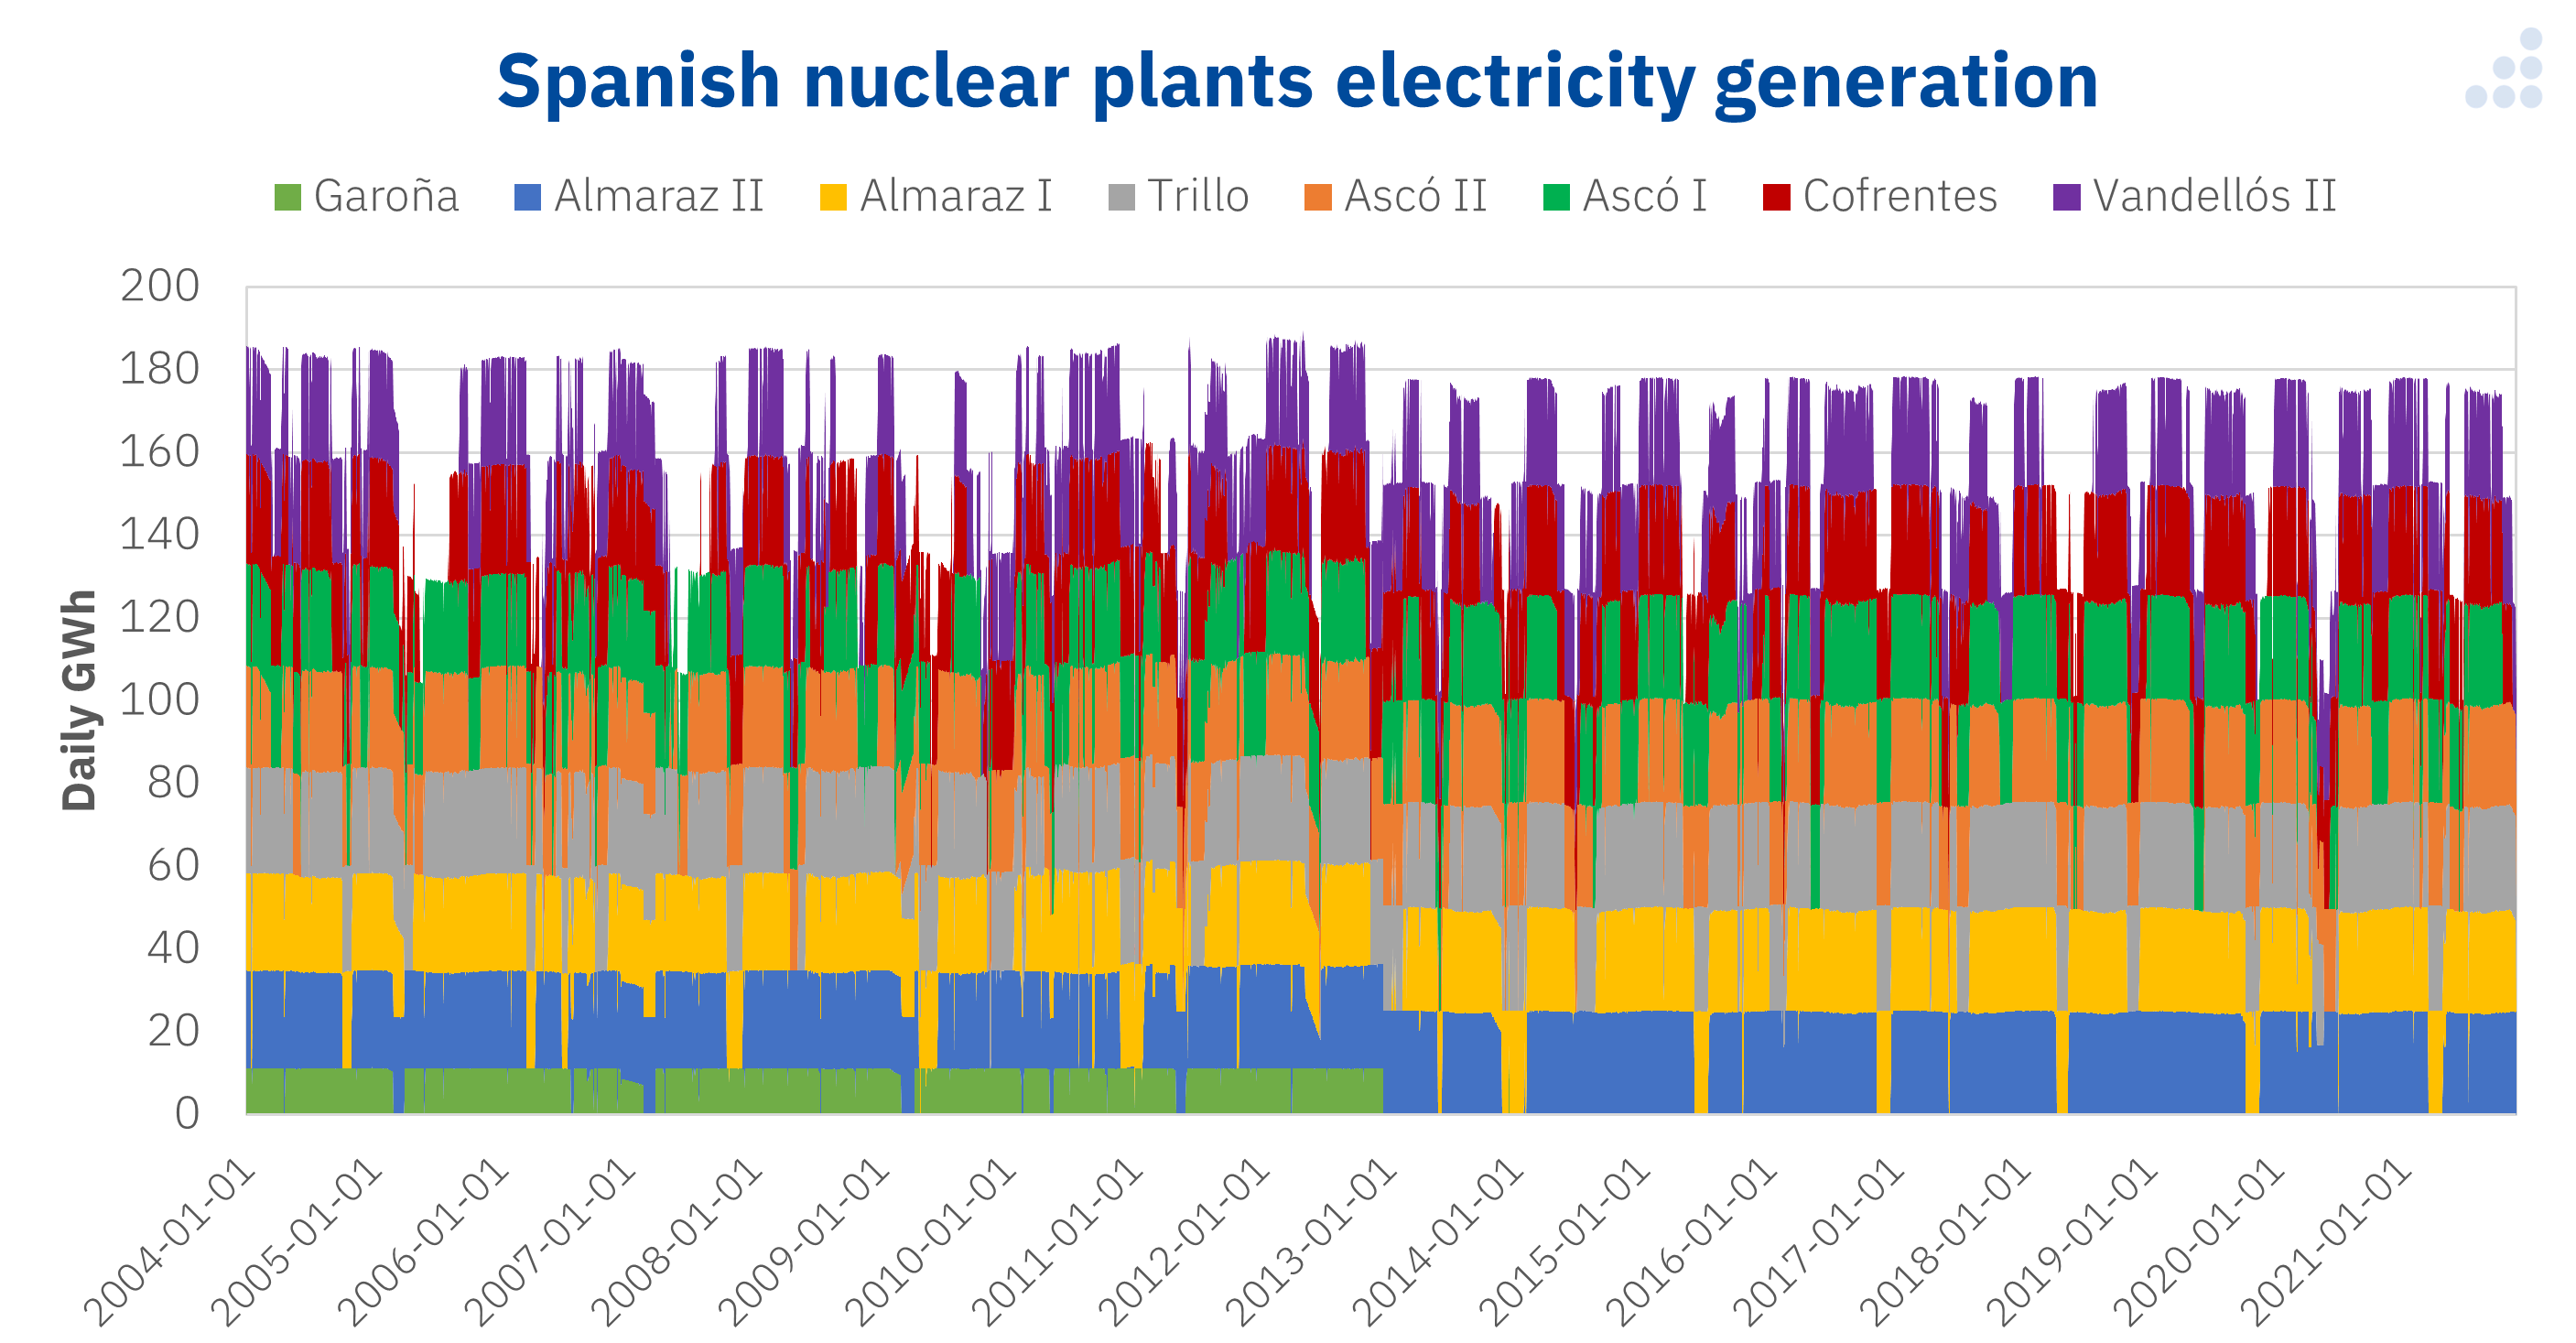 AleaSoft - Electricity generation nuclear plants Spain